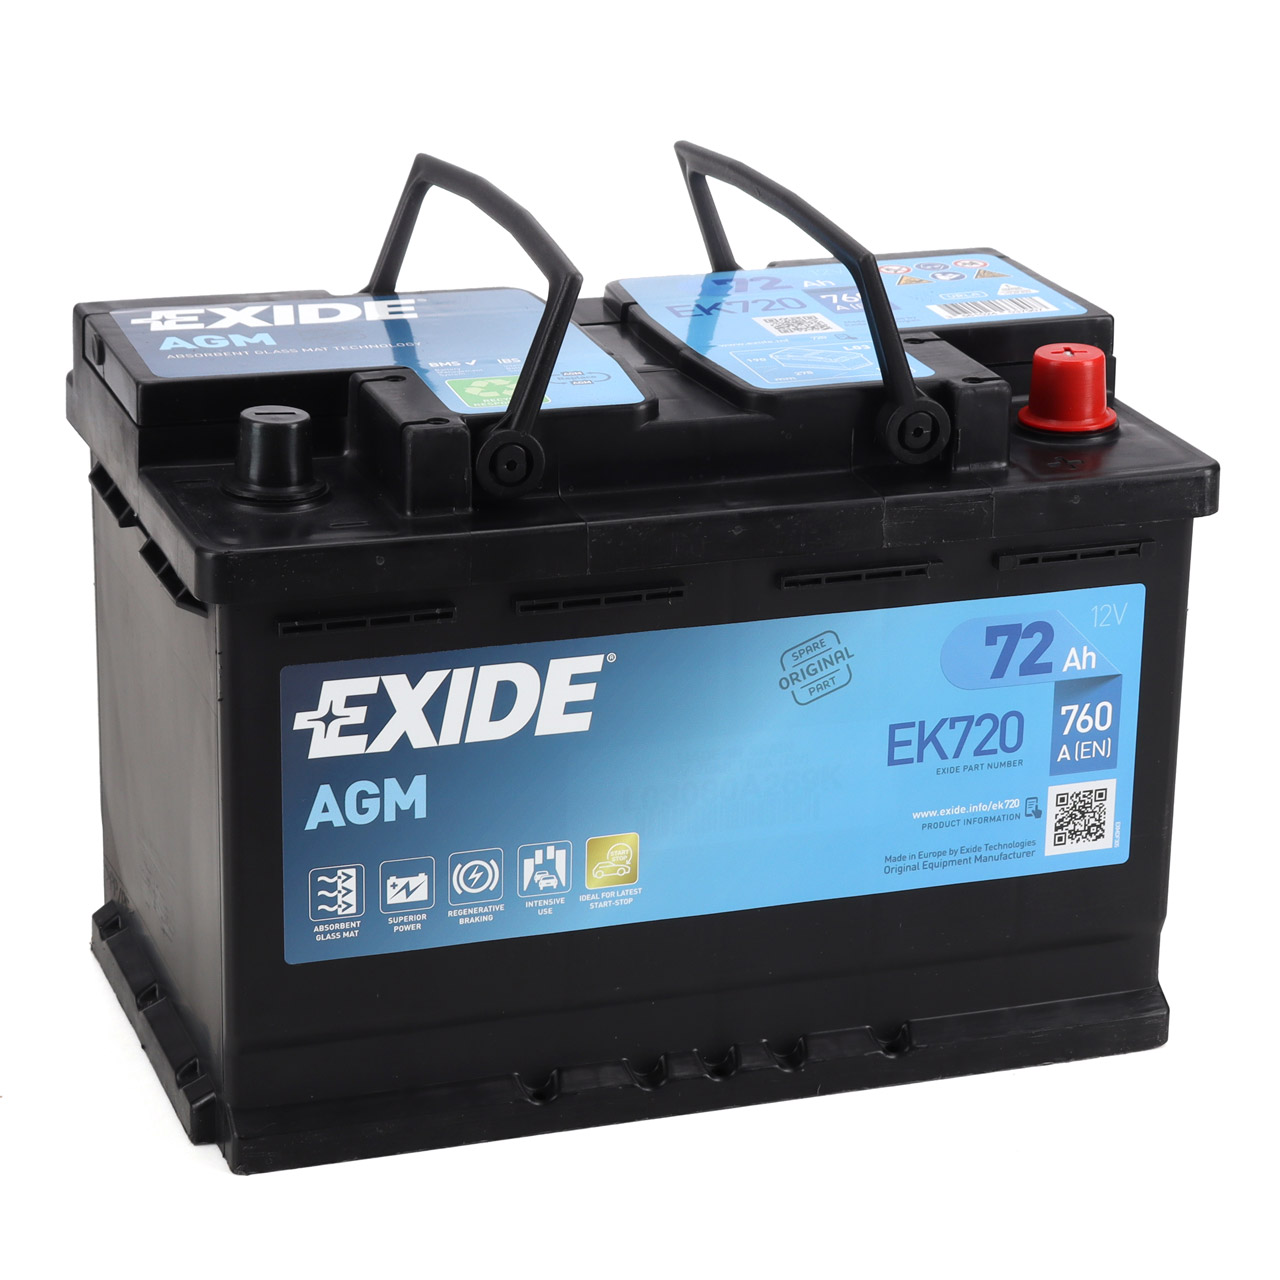 EXIDE Starterbatterien / Autobatterien - EK720 